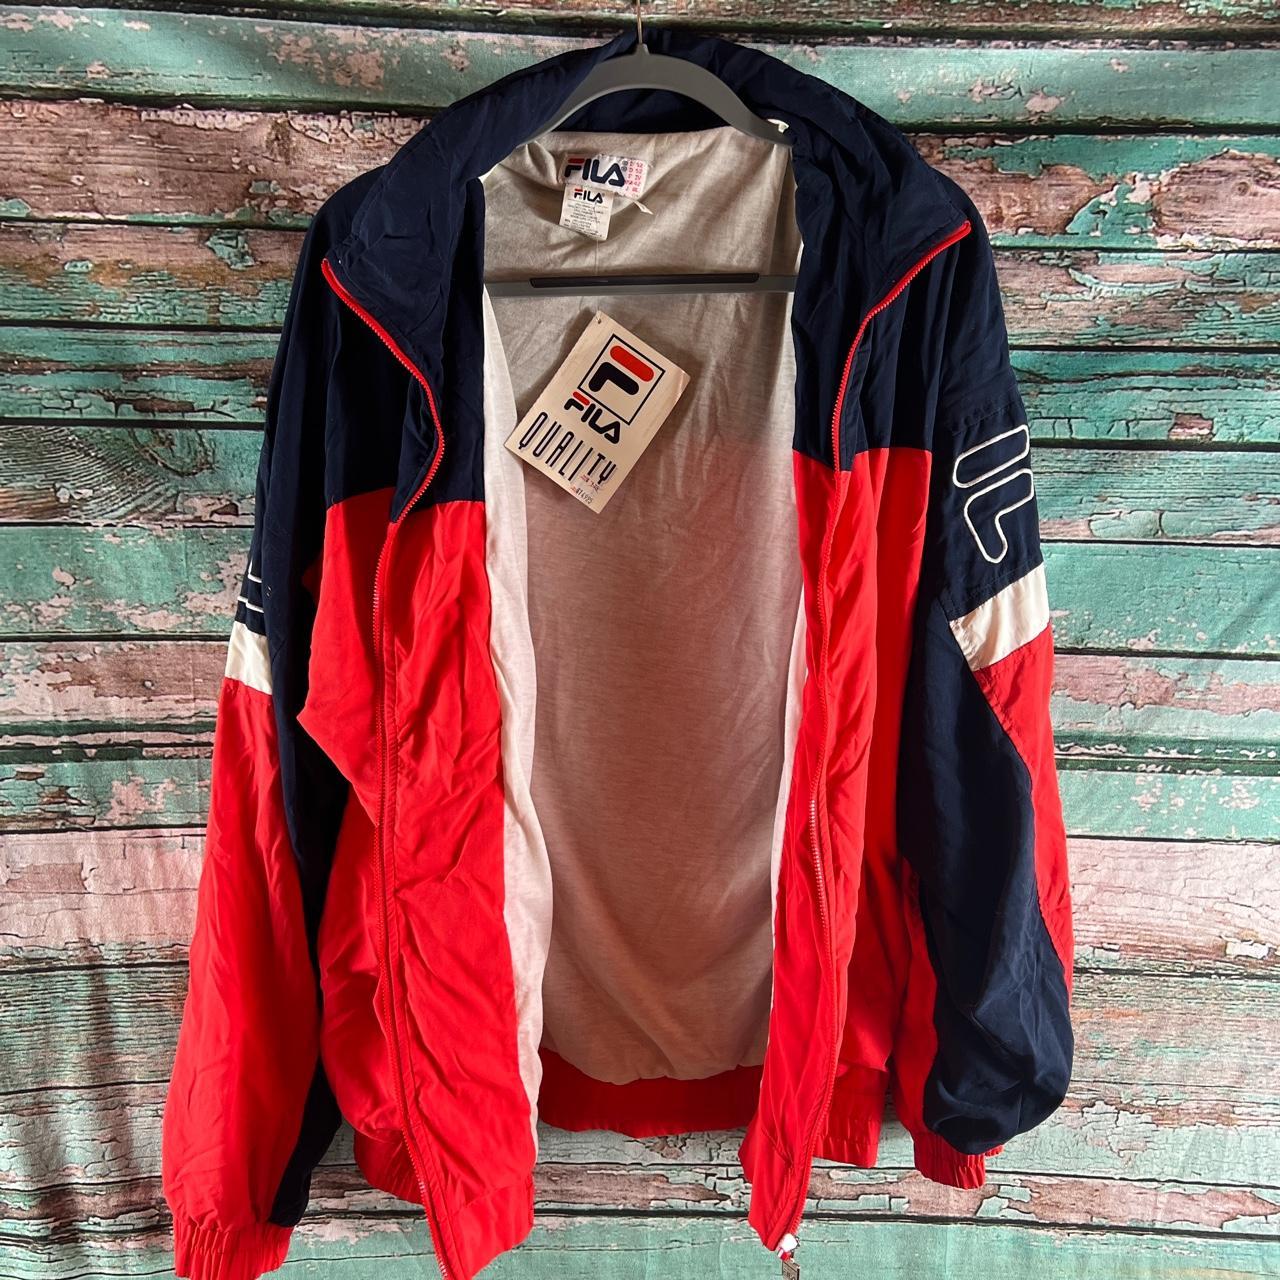 Vintage 90s early 2000s FILA track sports jacket/ - Depop